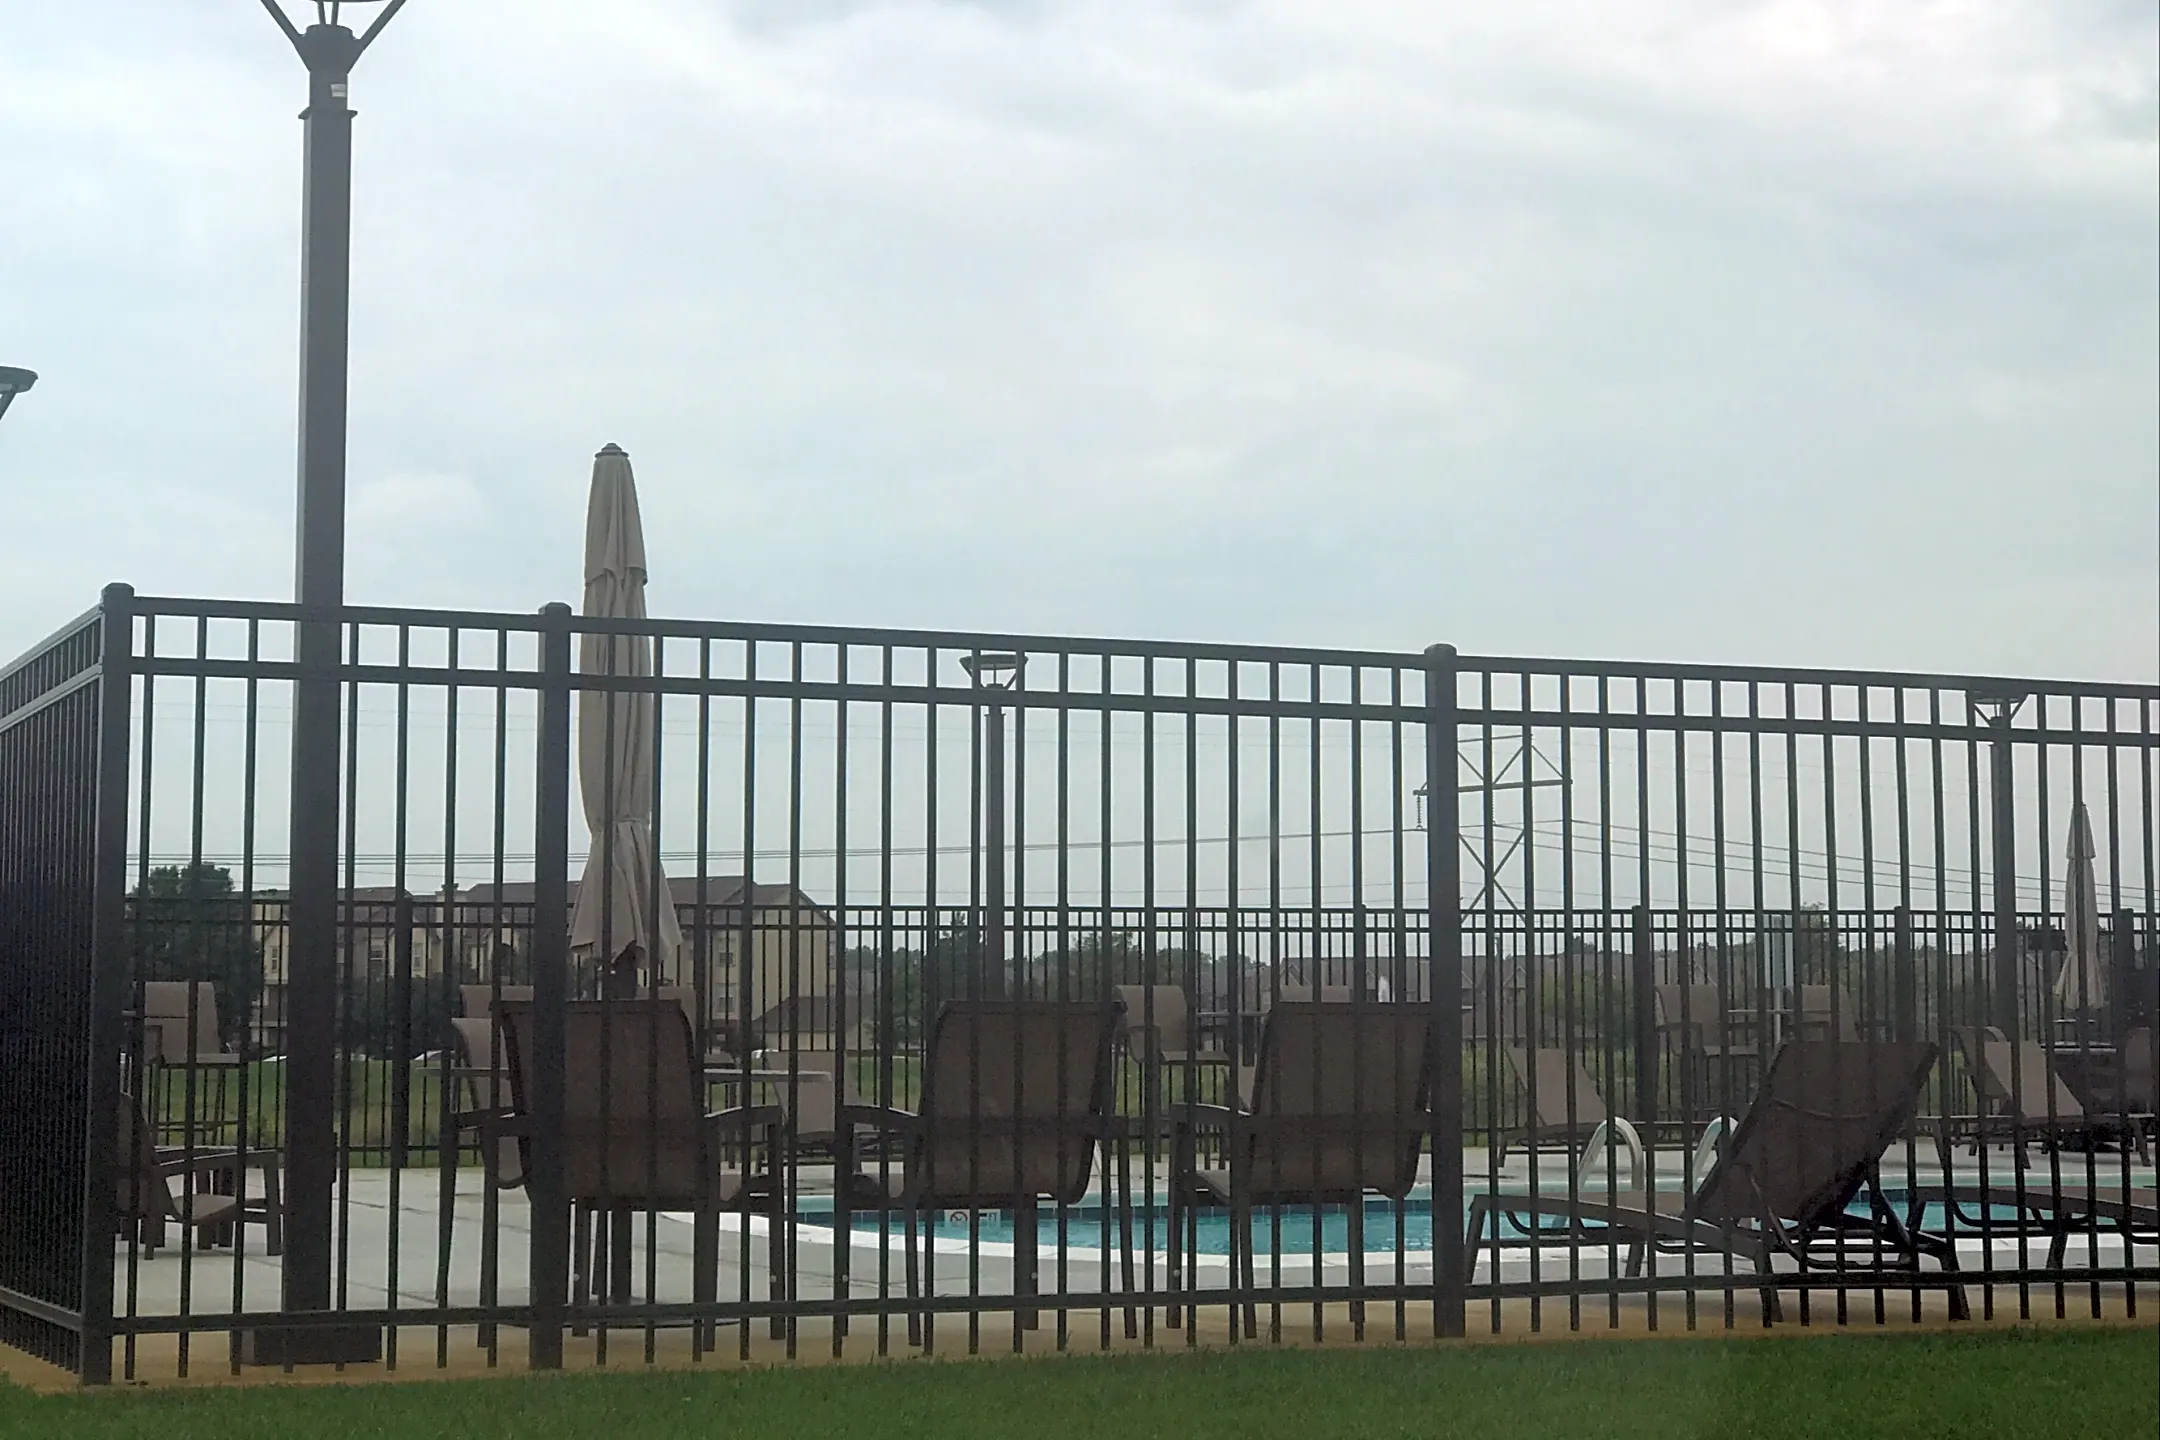 Pool - Central Bay Apartments - Wichita, KS